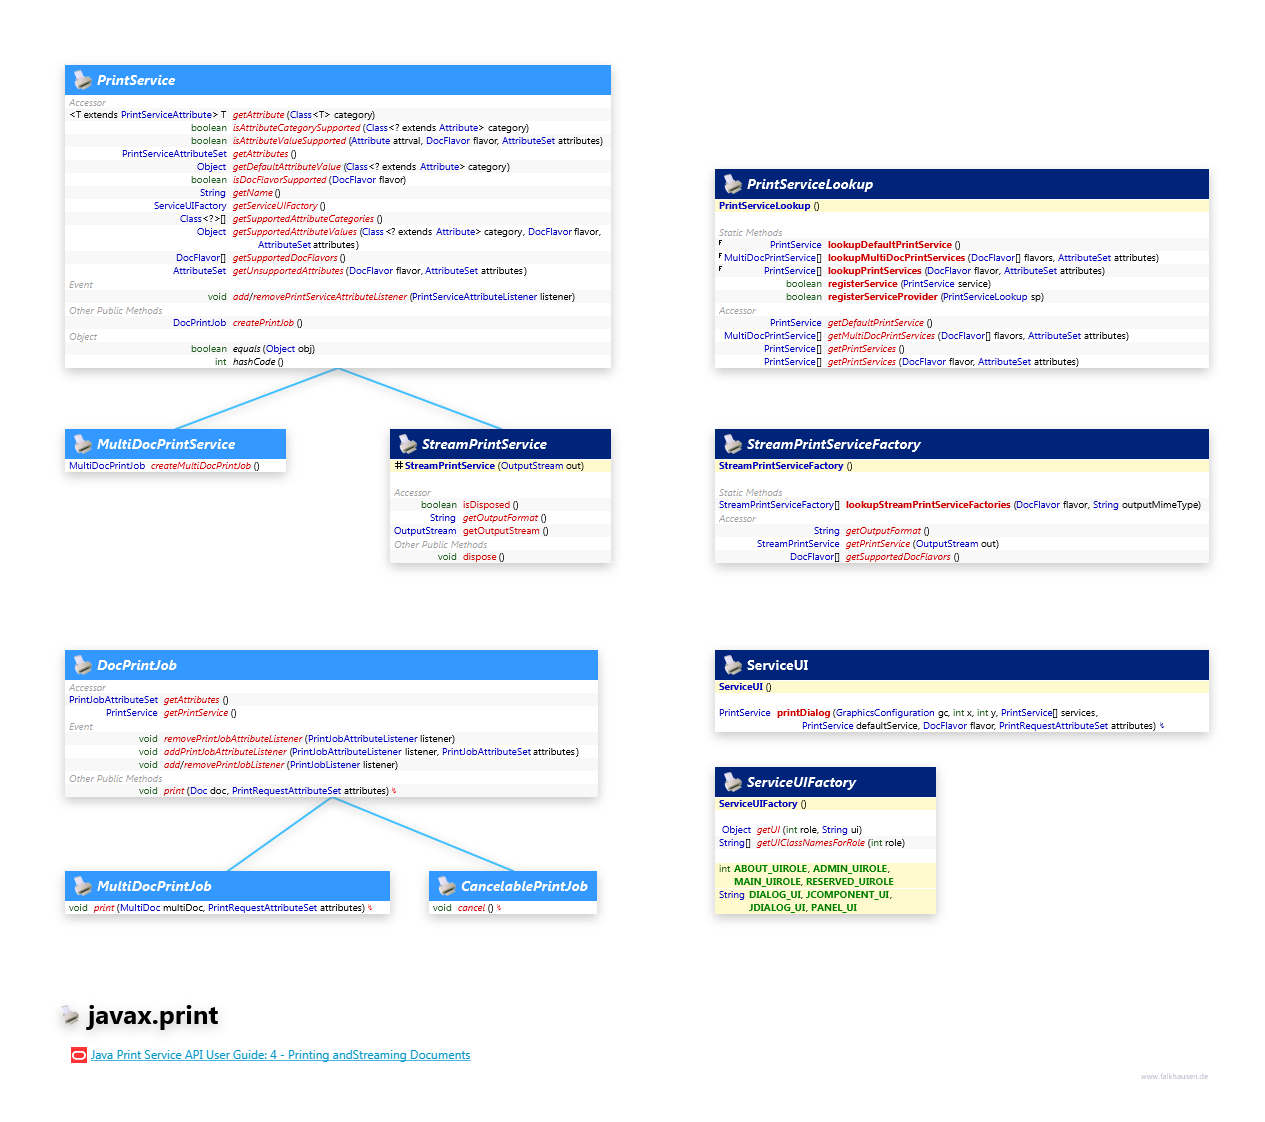 javax.print PrintService class diagram and api documentation for Java 7